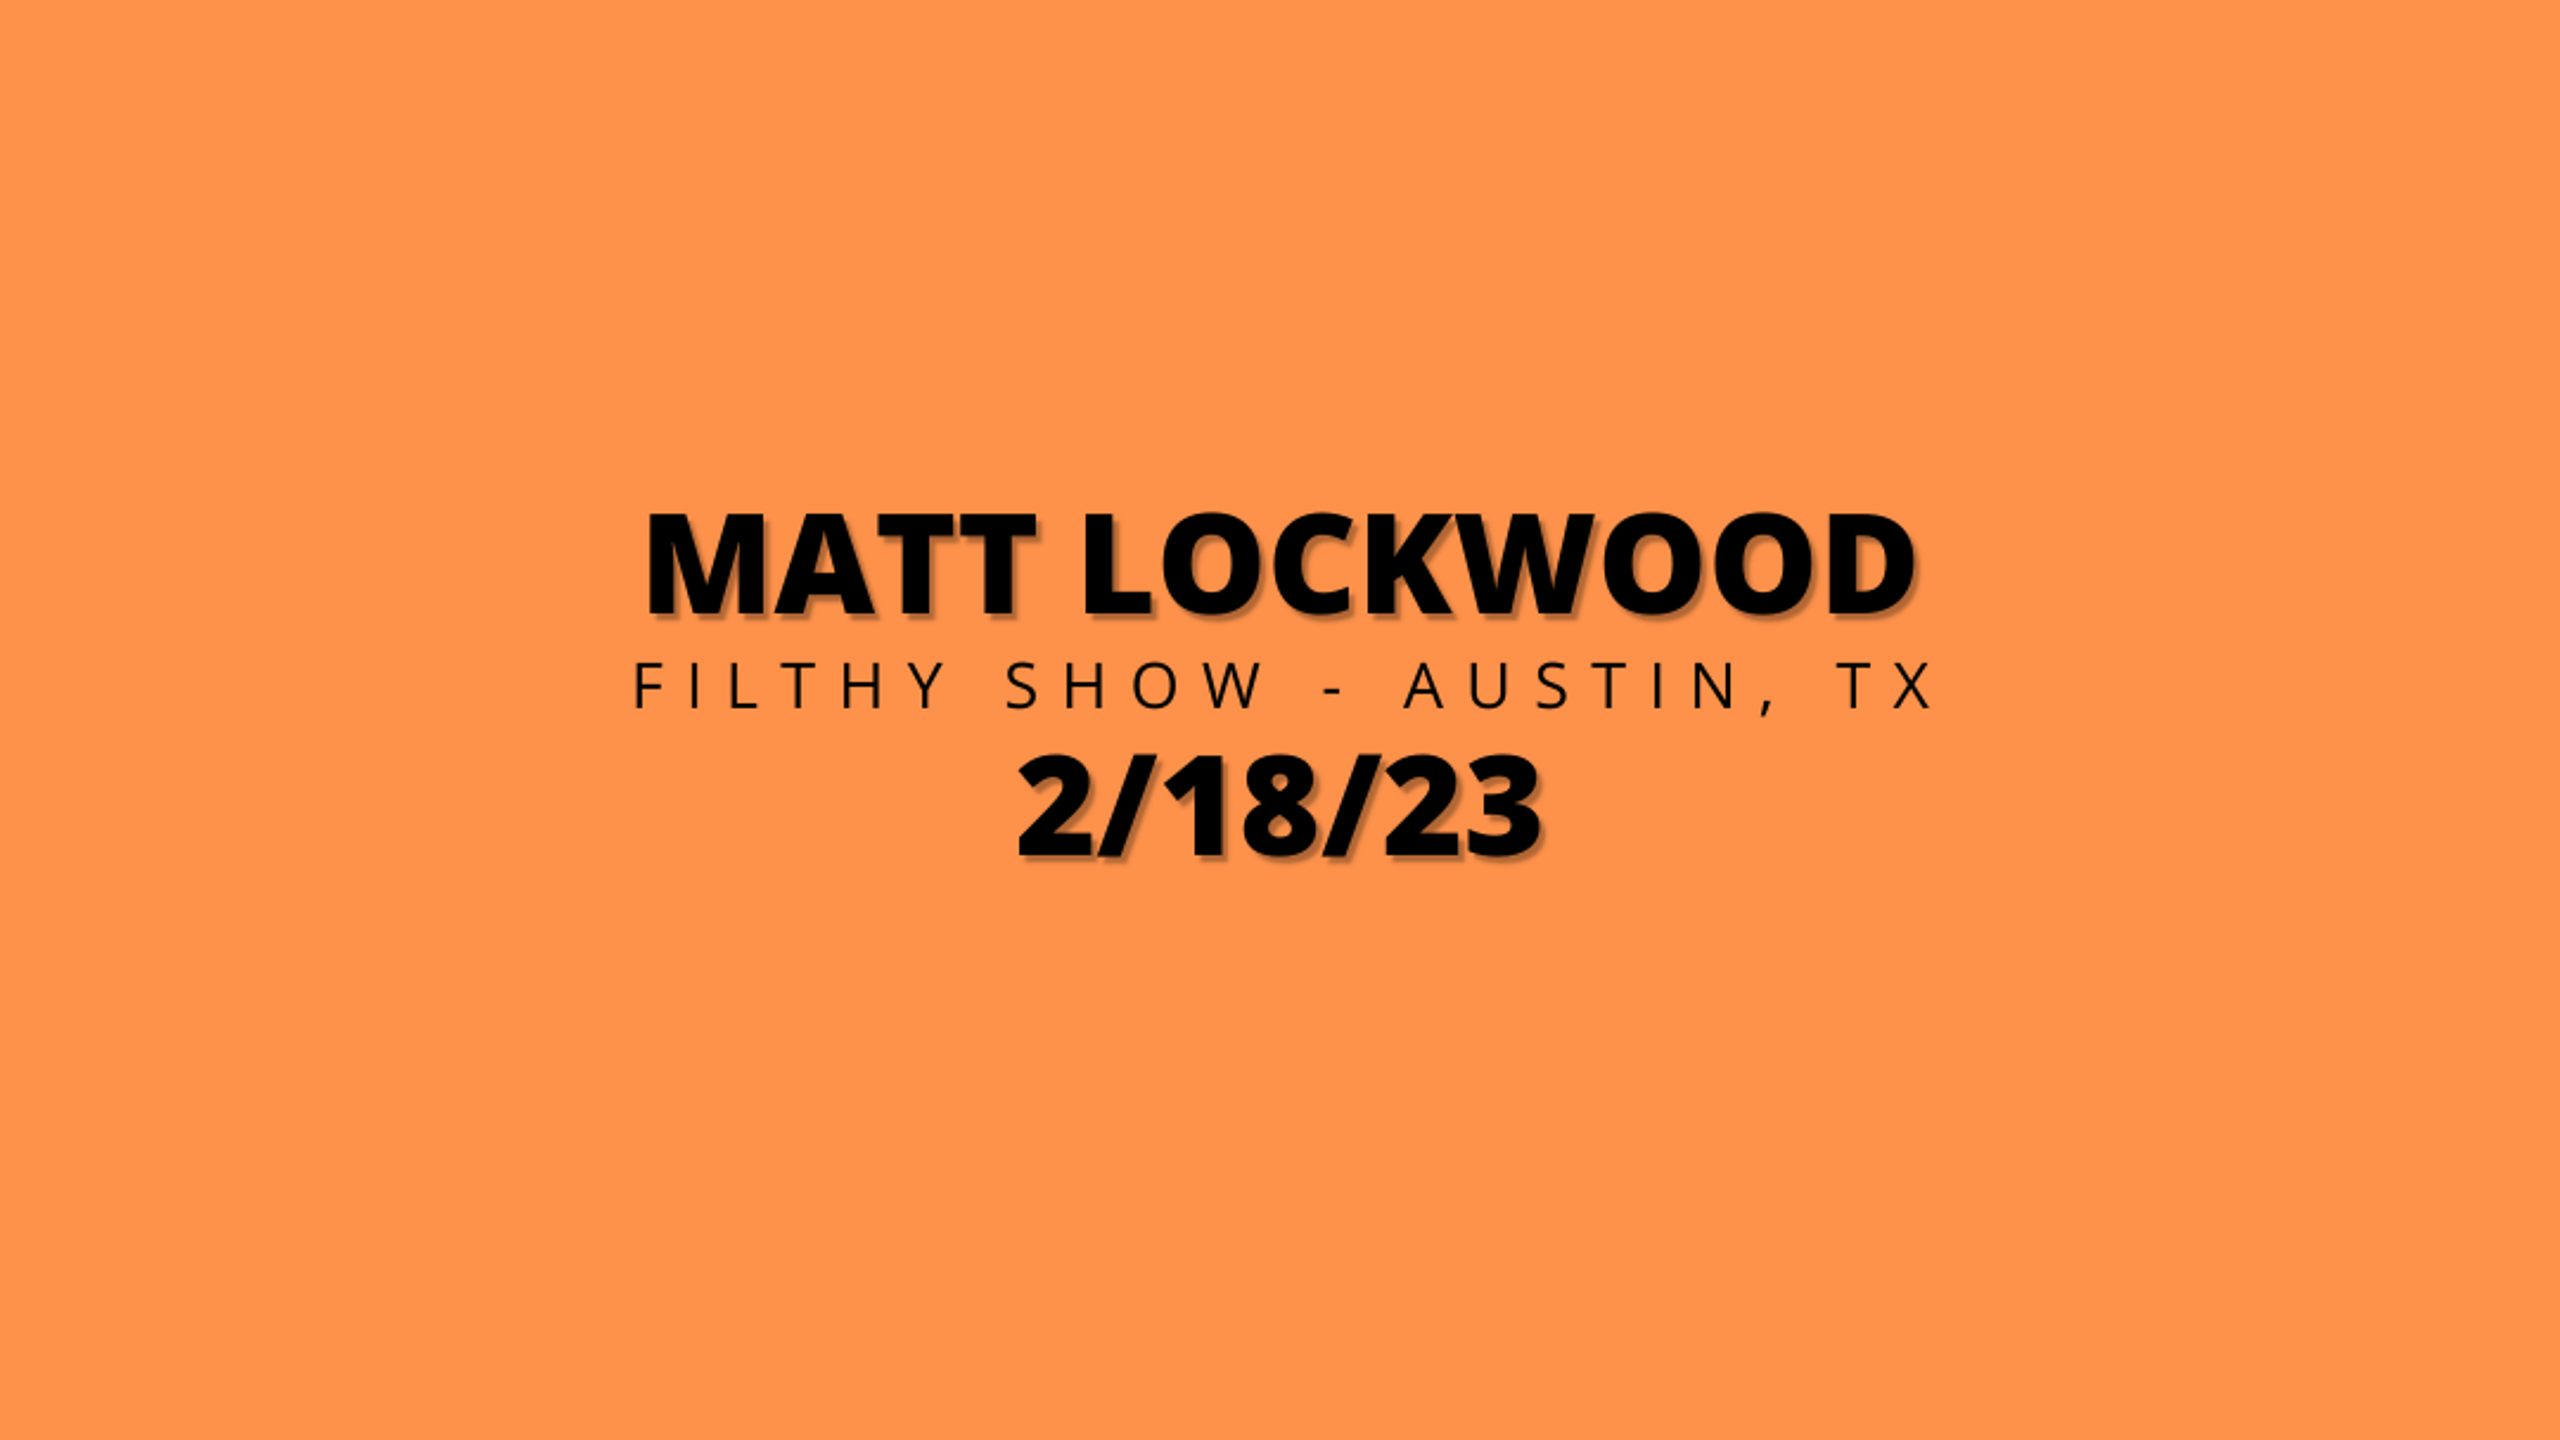 Matt Lockwood in Austin, Texas